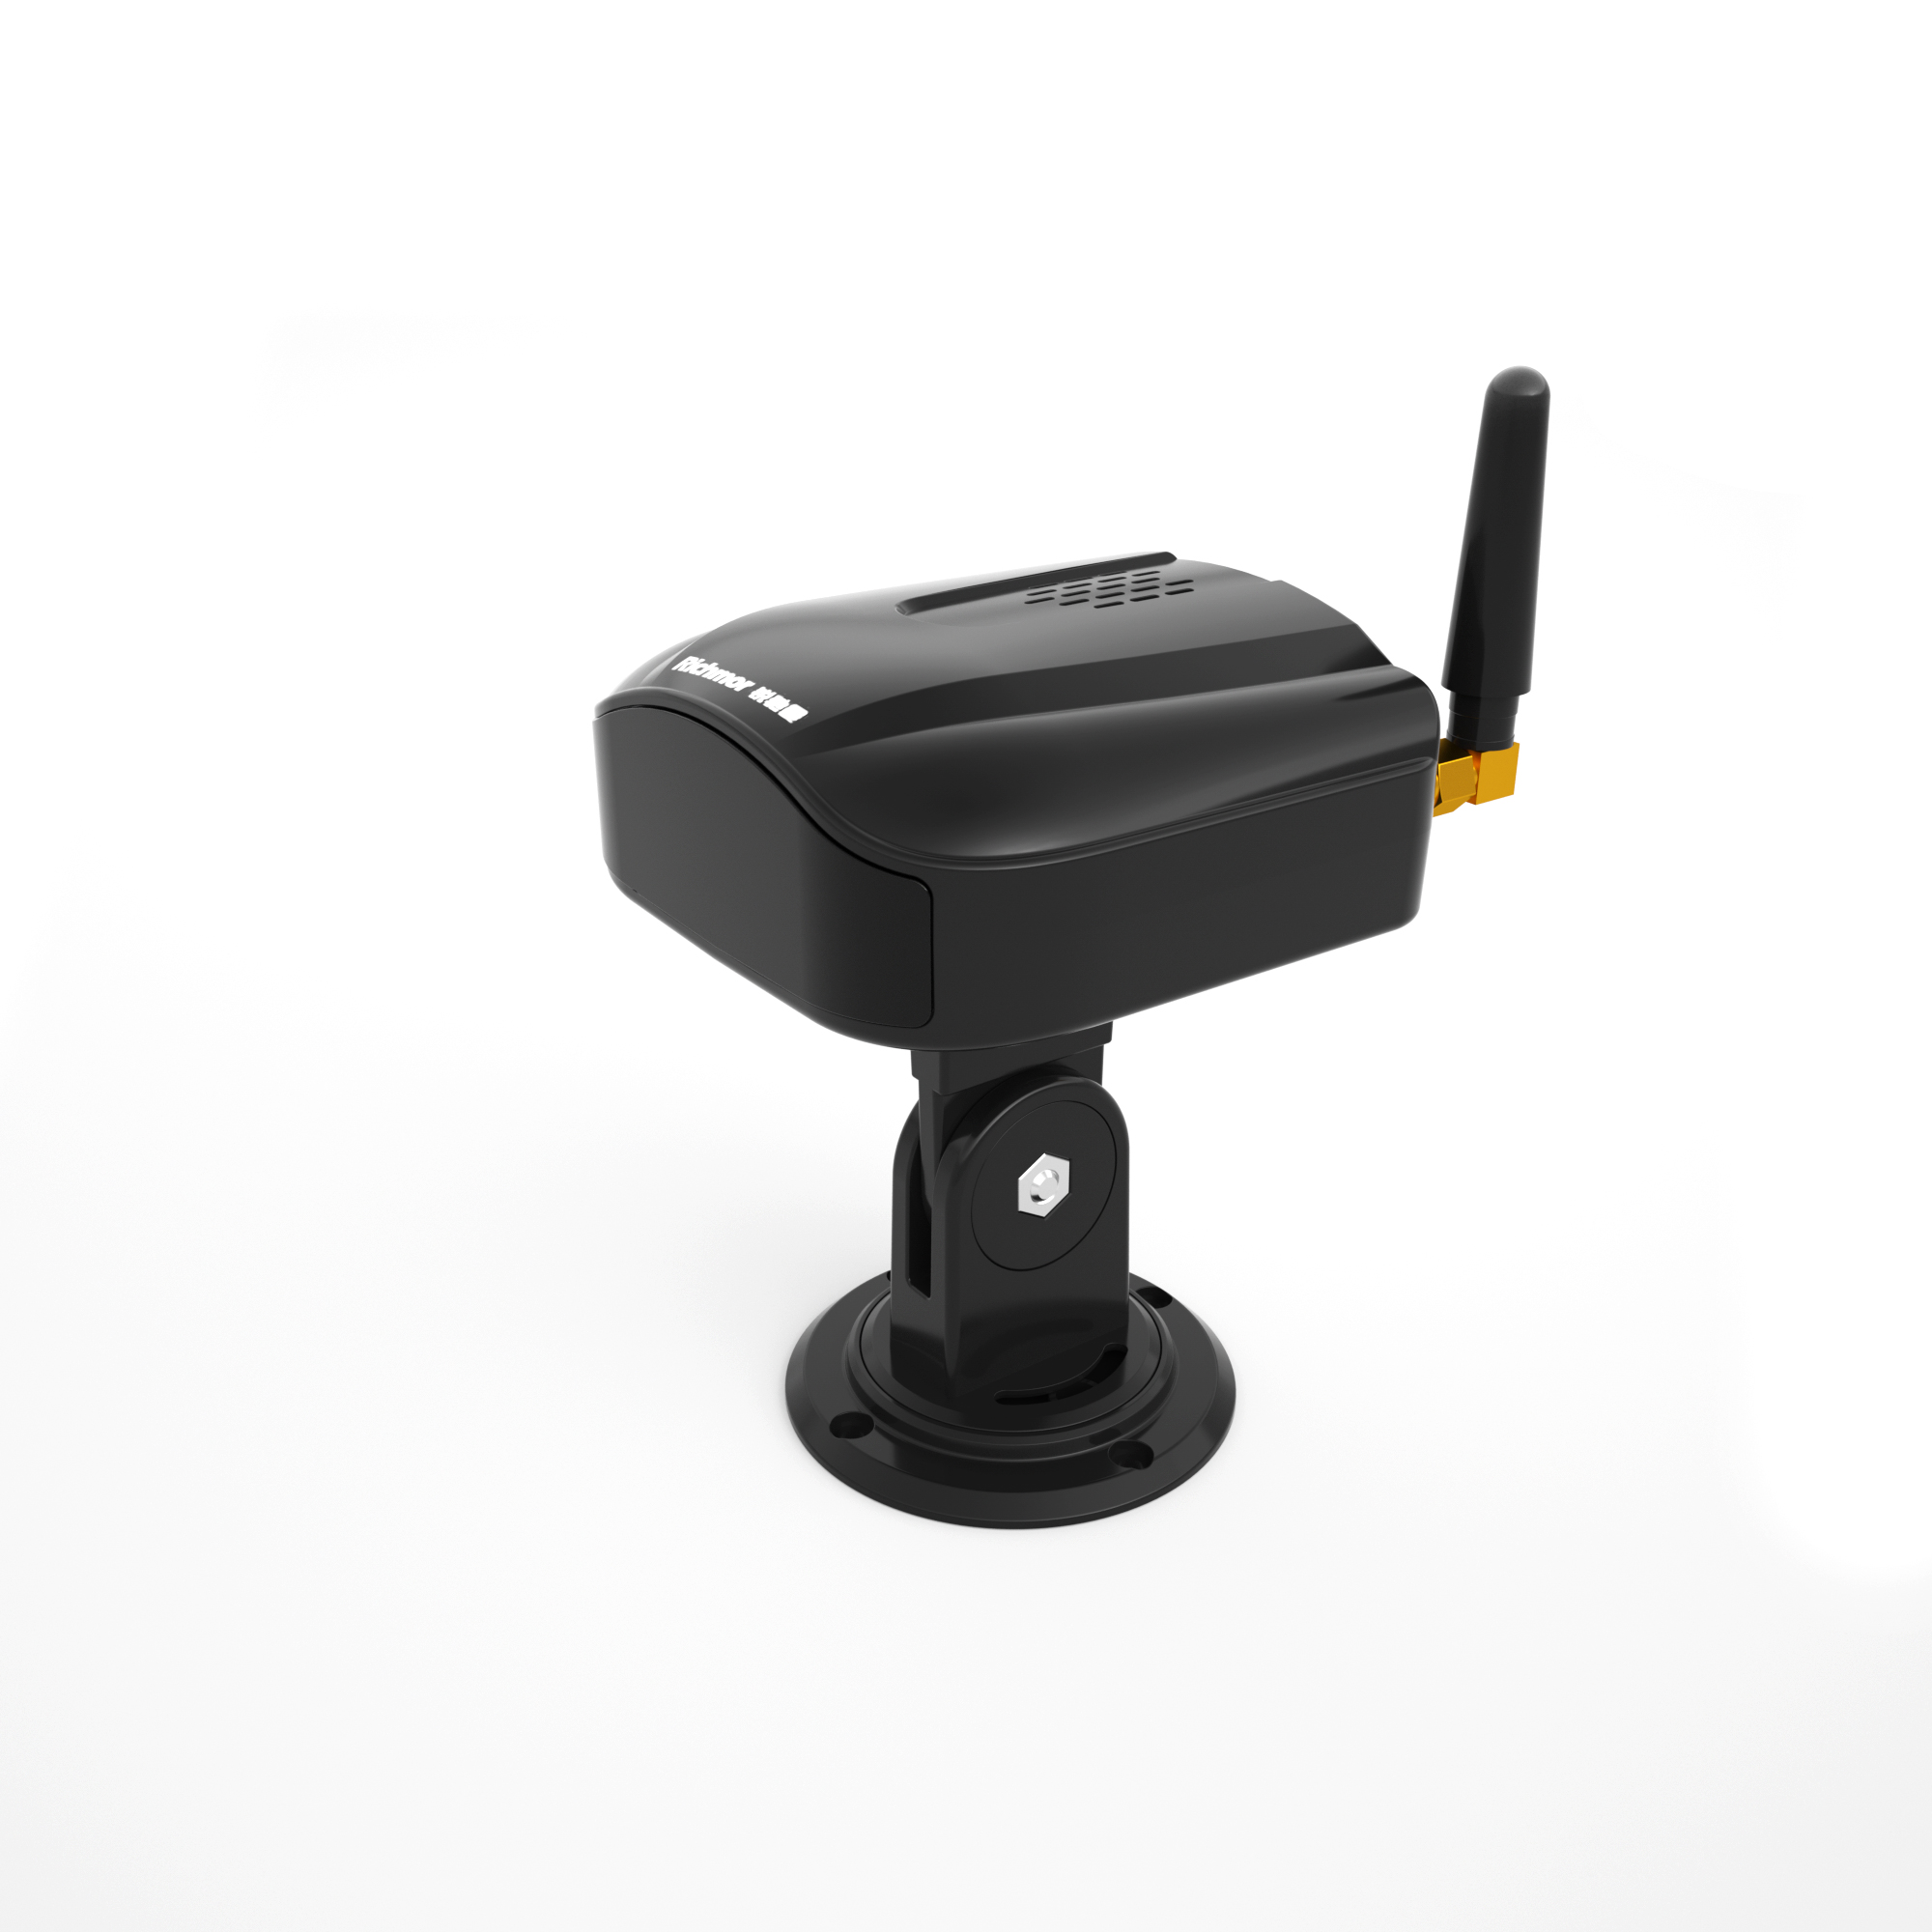 CAR CCTV камера DI3 4G Mobile DVR GPS WiFi Dashcam China MDVR Производитель